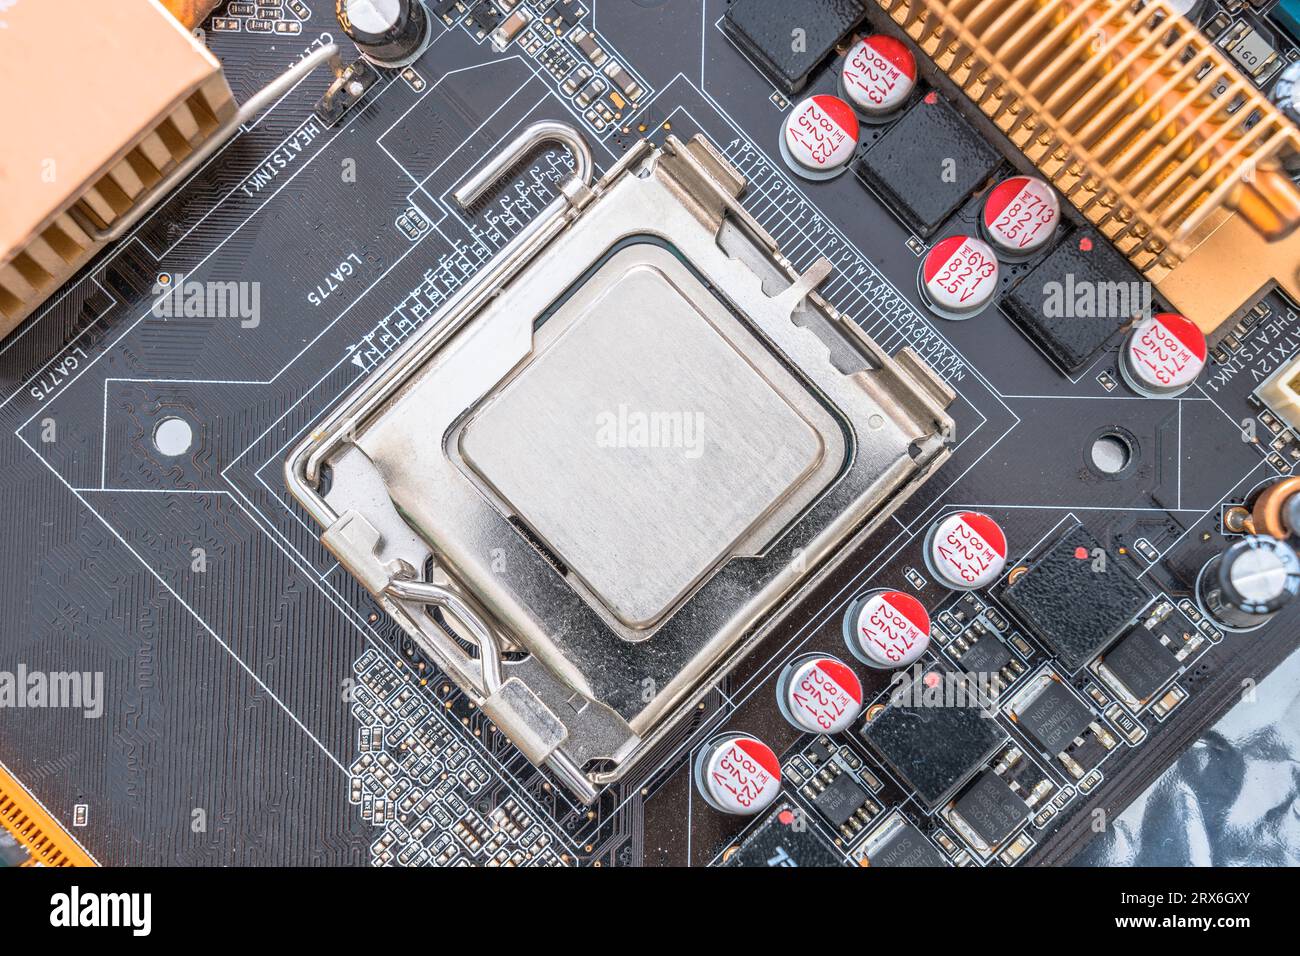 CPU in mother board CPU slot Stock Photo